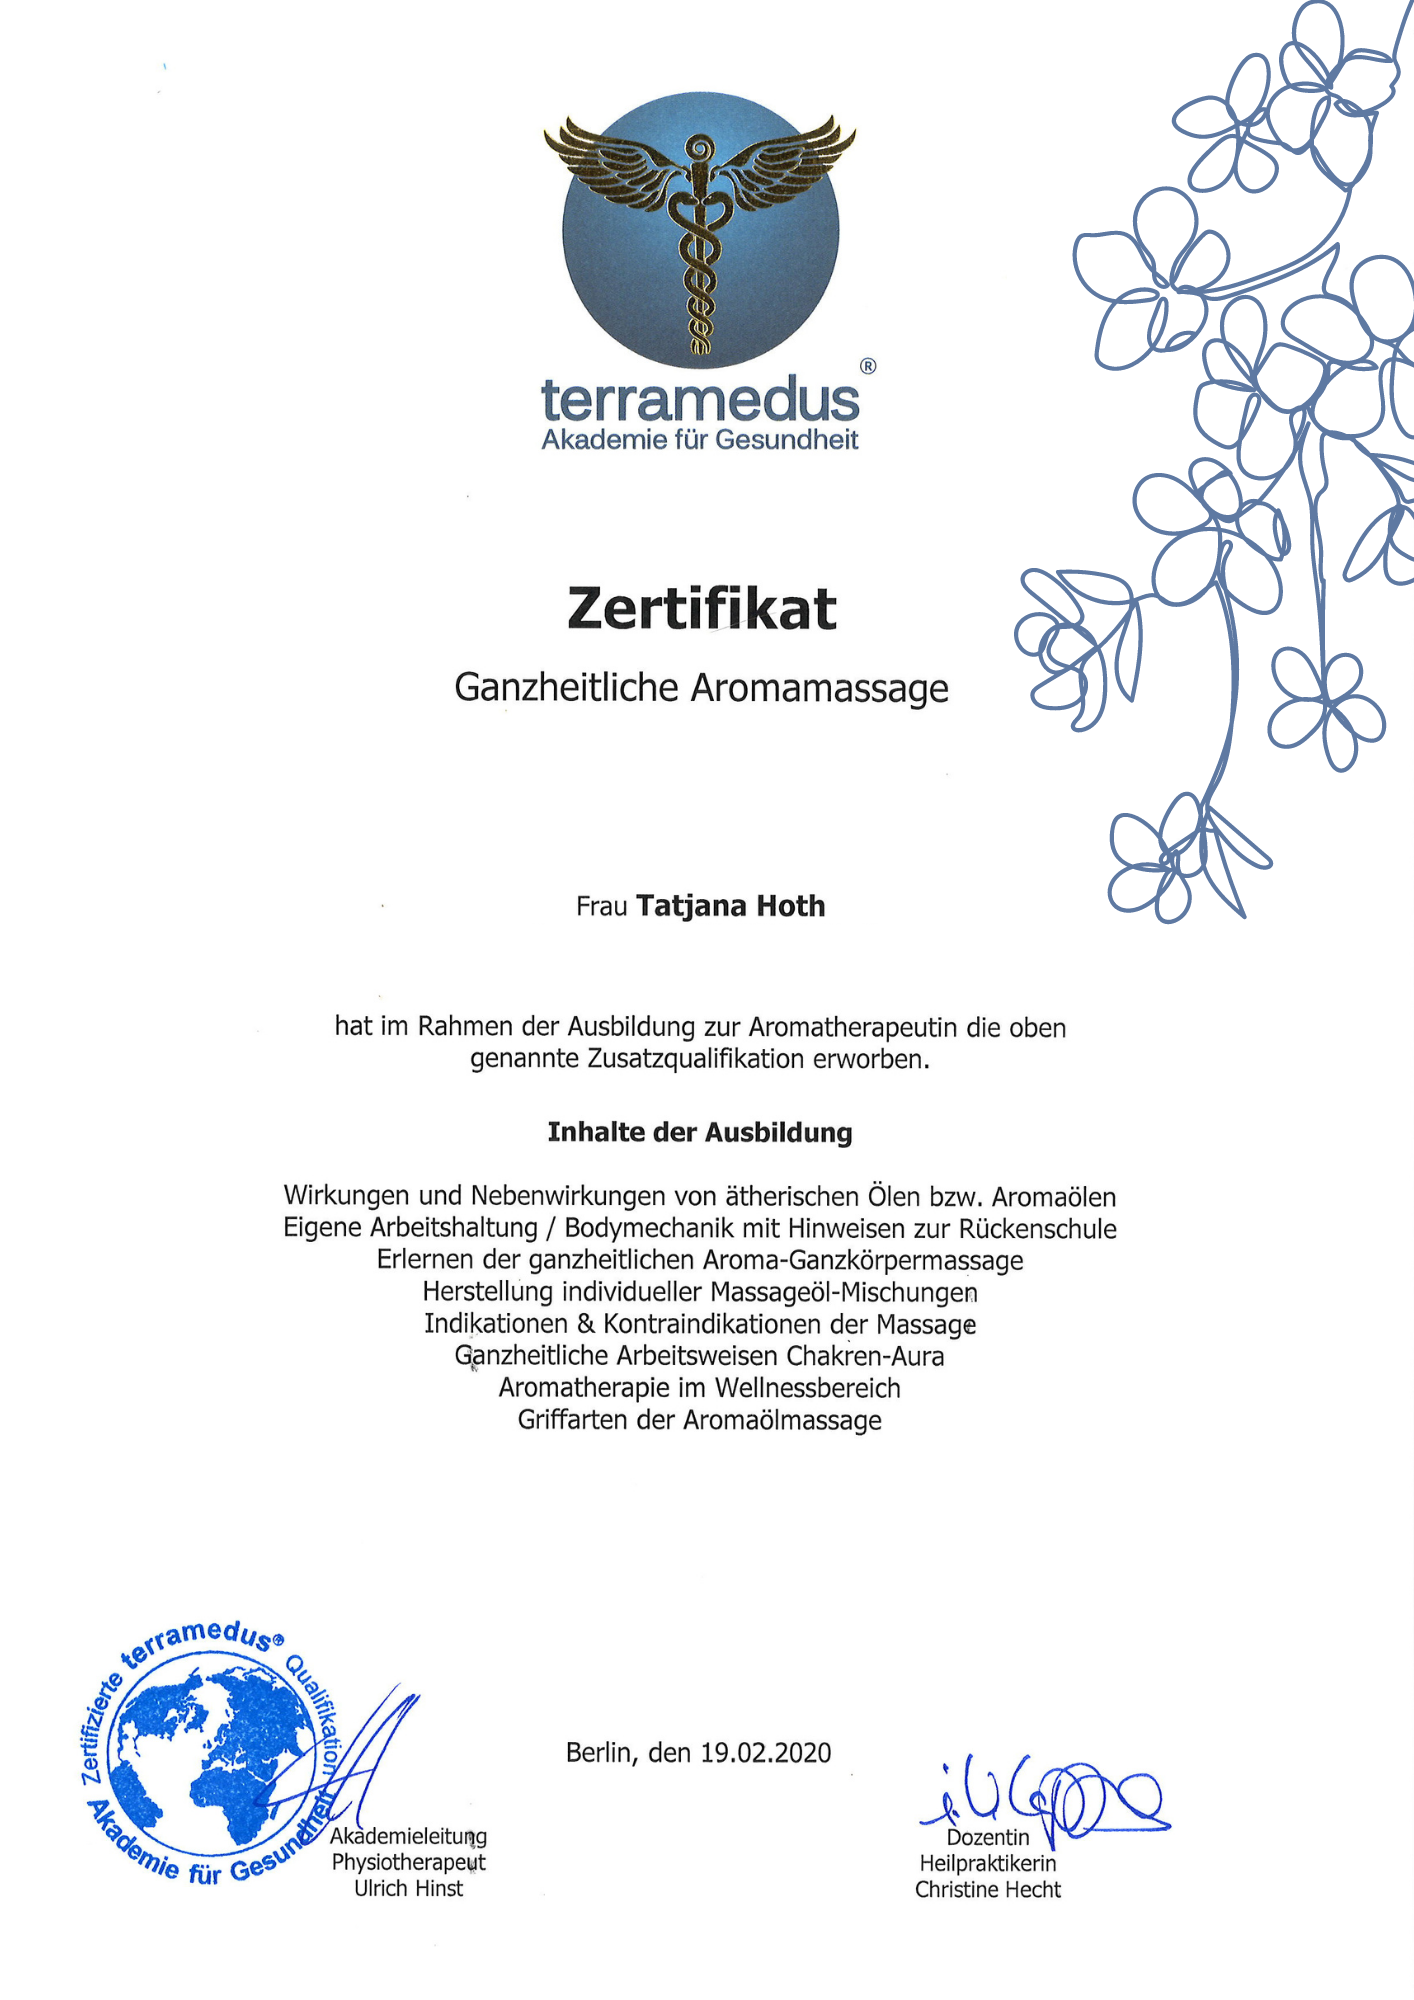 Zertifikat "Aromaöl-Massage", Tatjana Hoth, Wilder Thymian, Aromatherapie und Massagen Berlin